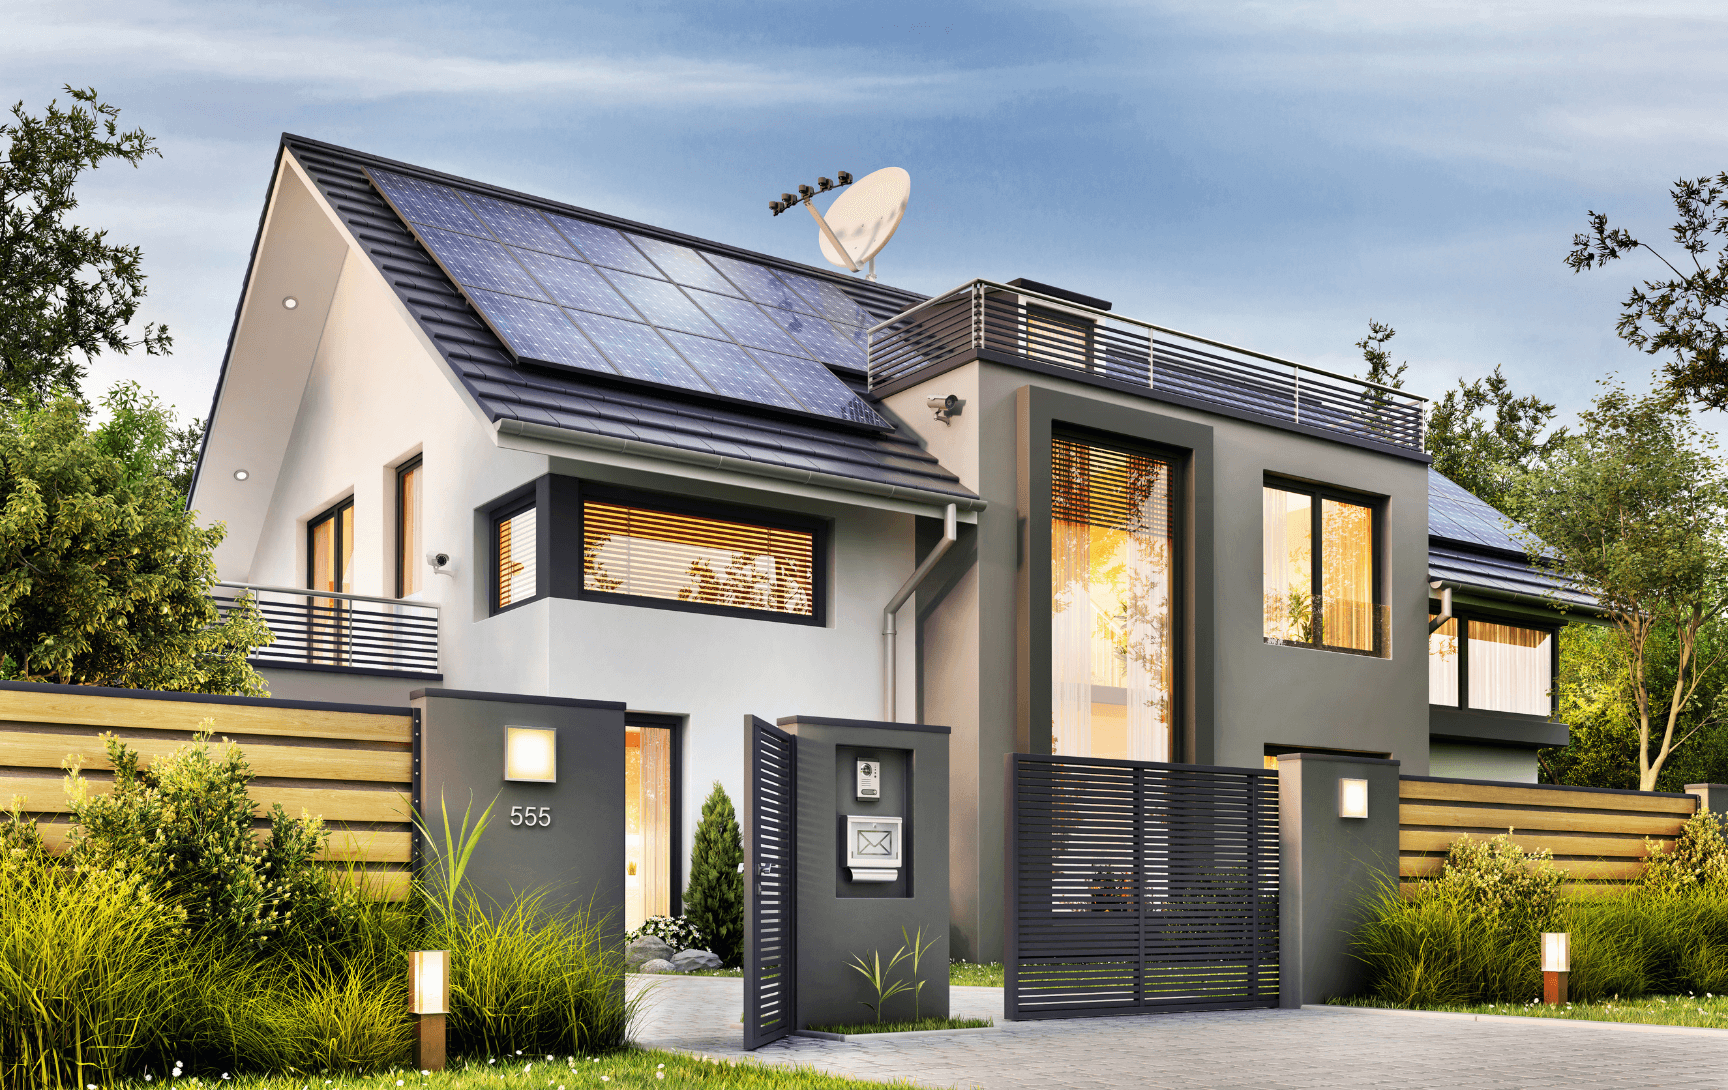 Home solar panels